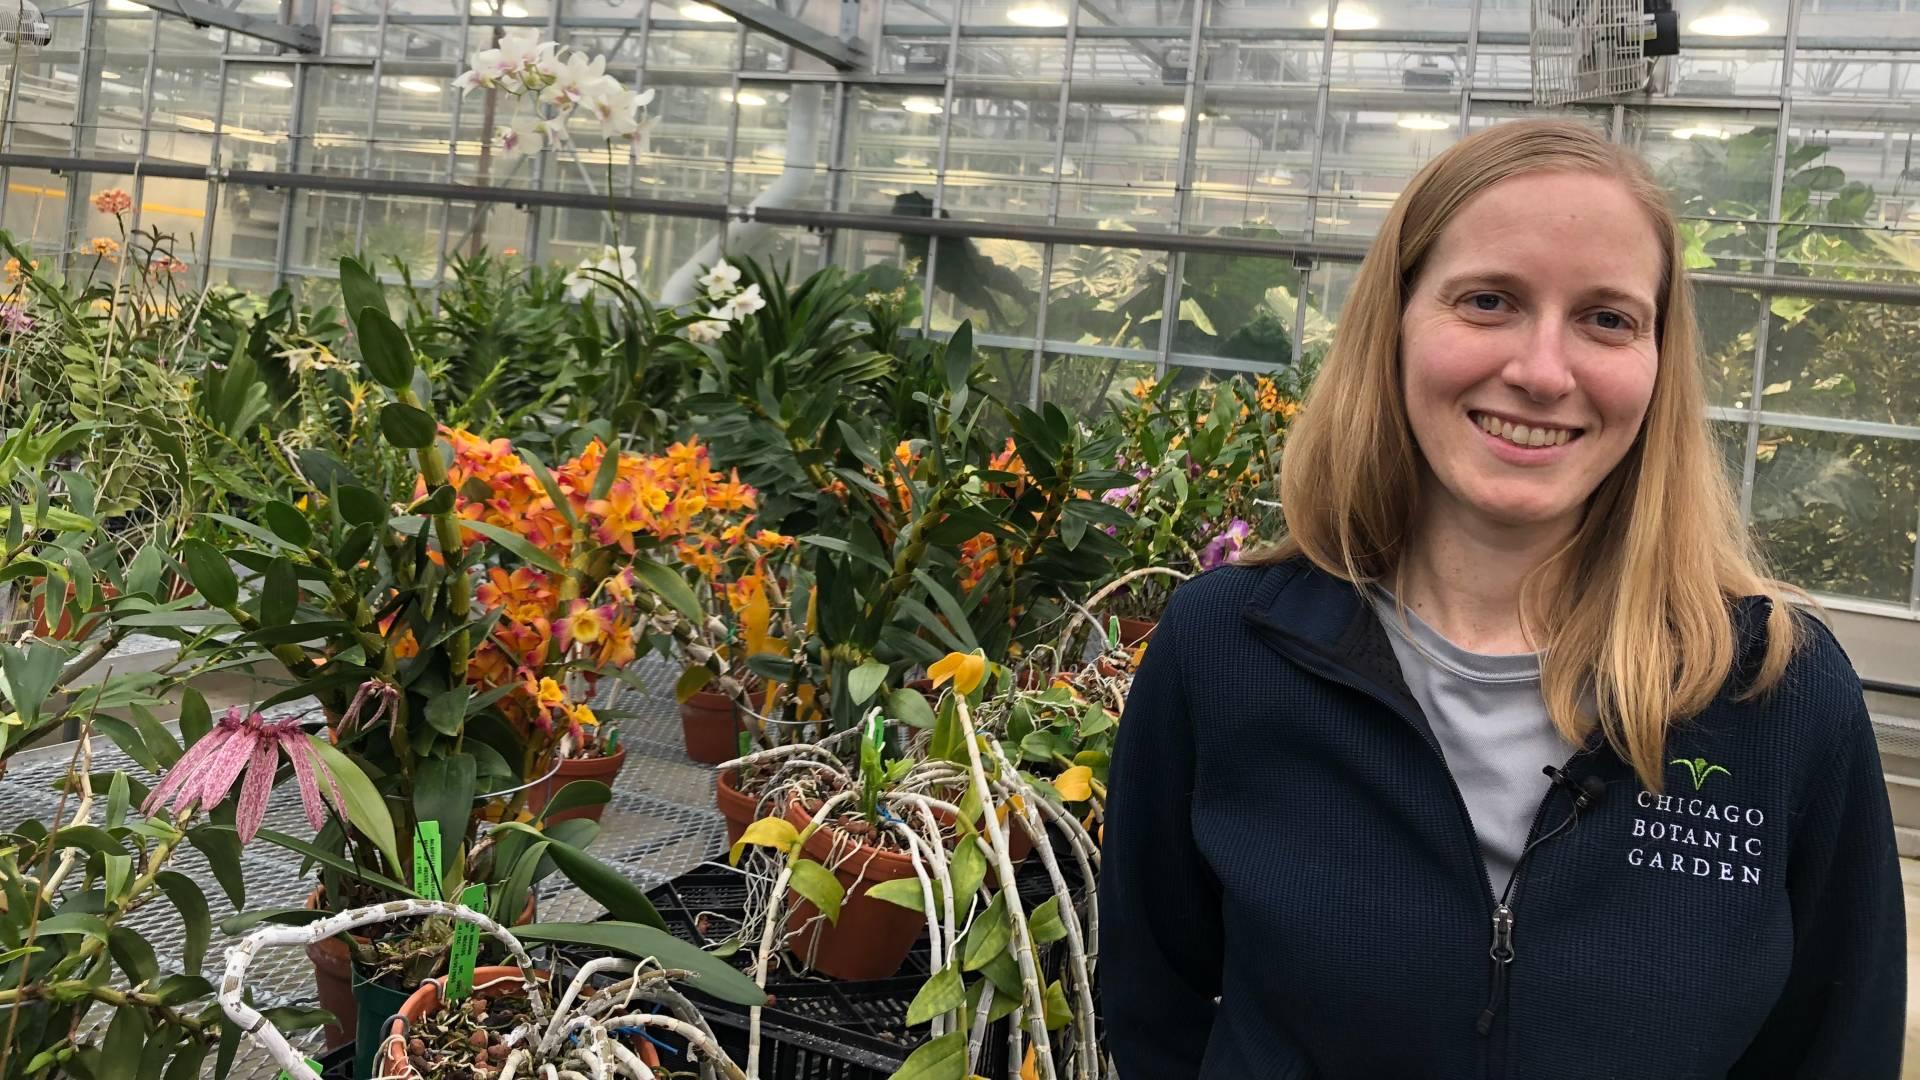 Floriculturist Johanna Hutchins in the Chicago Botanic Garden's Orchidarium. (Patty Wetli / WTTW News)